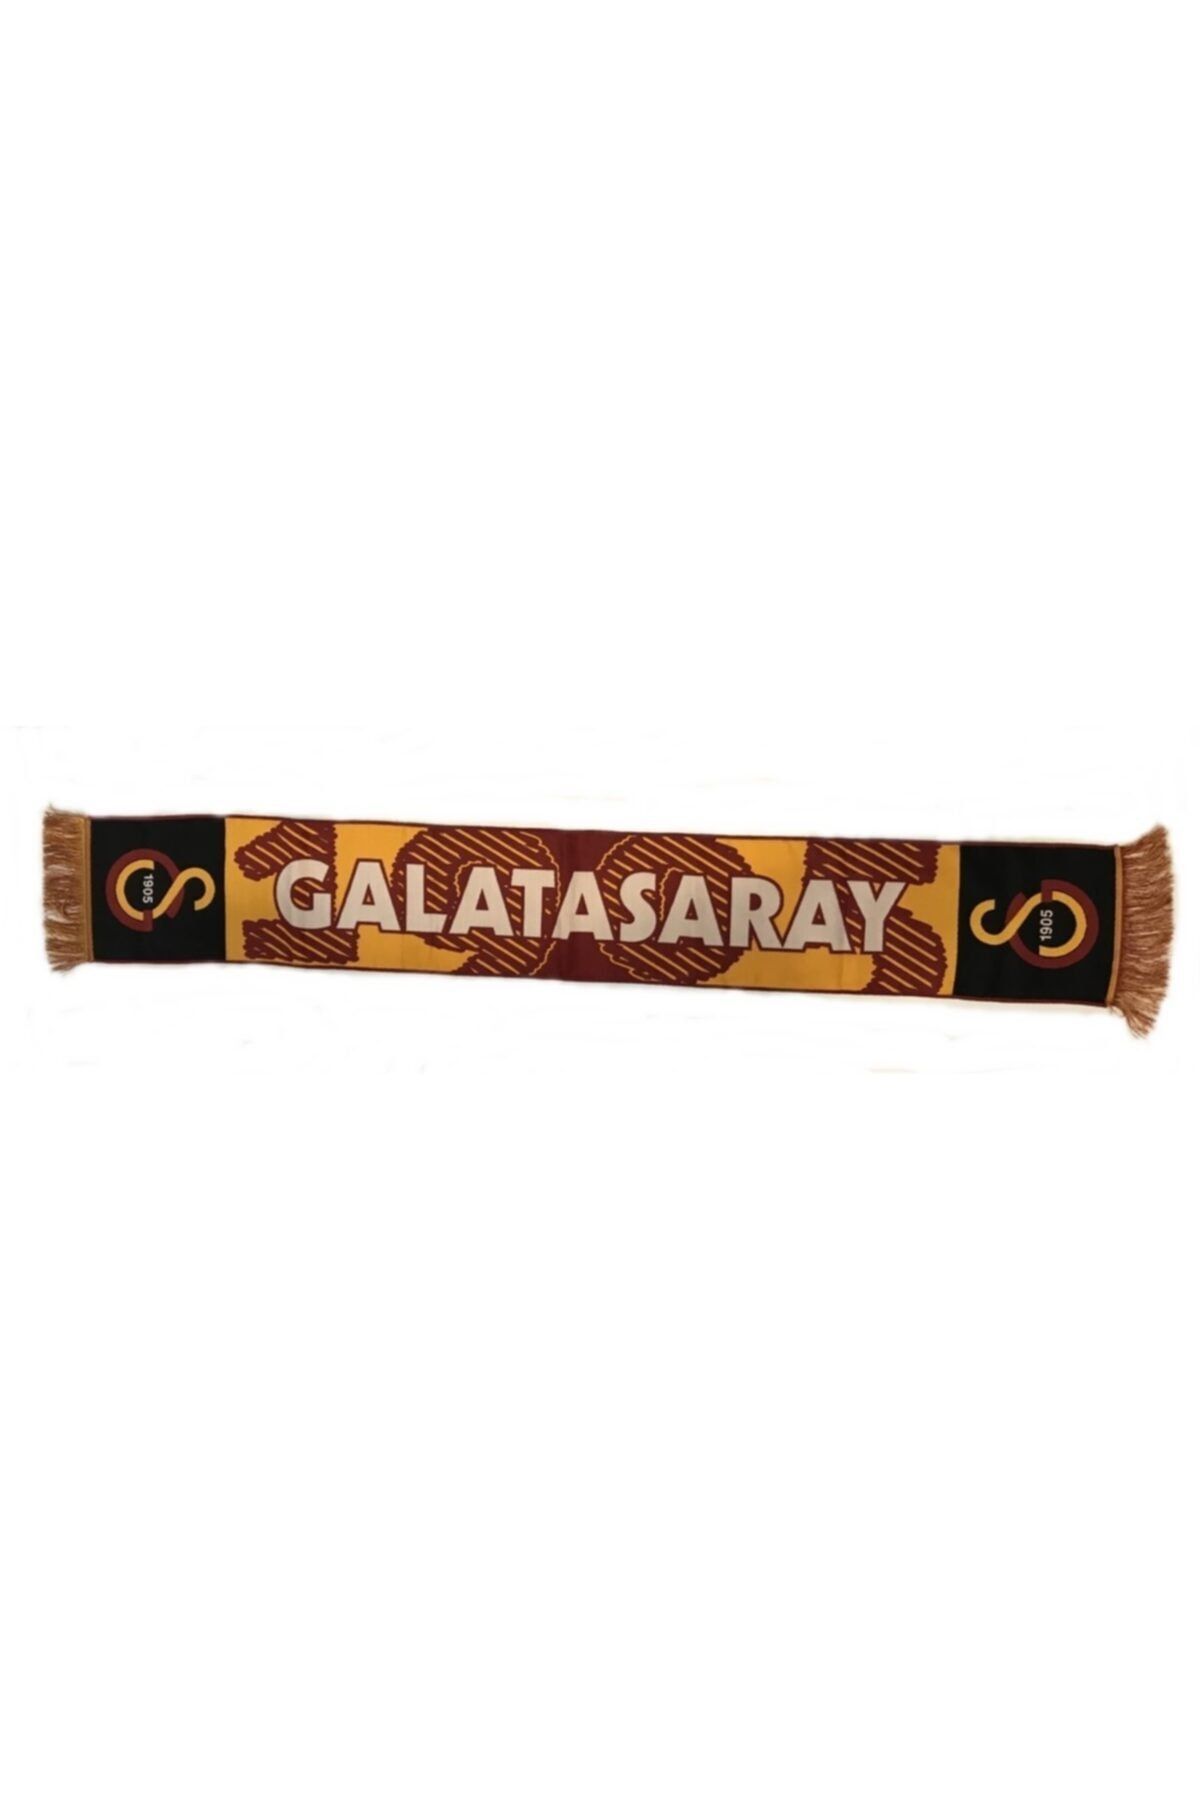 Galatasaray Galatasaray Forma Atkı Kaşkol-3